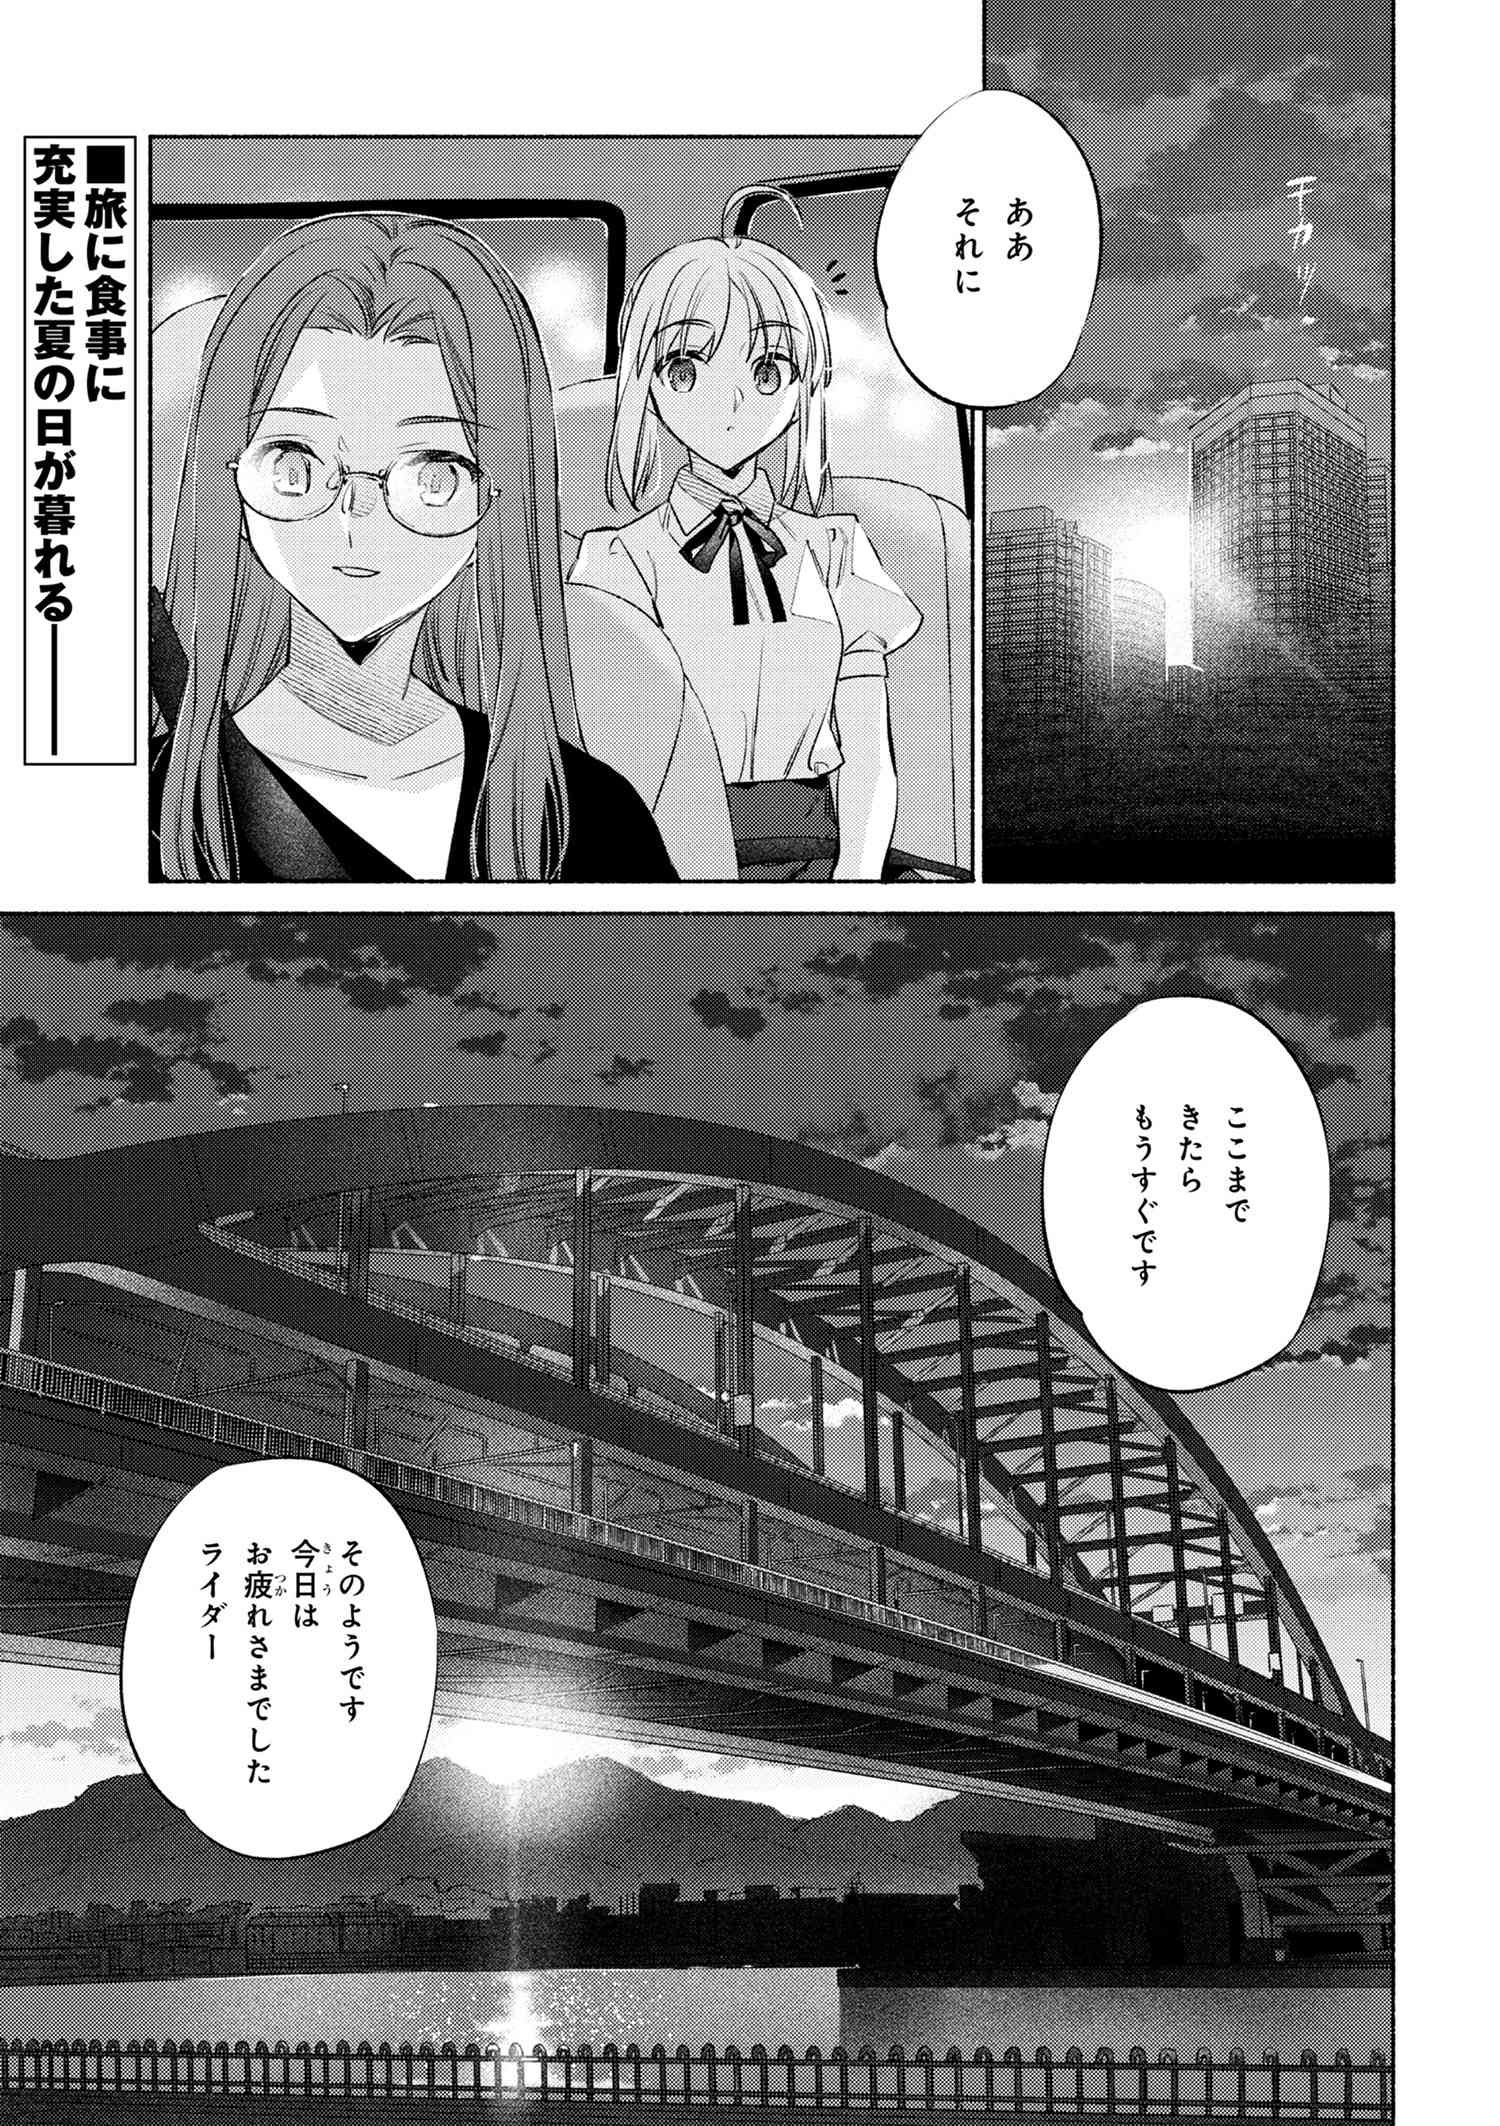 Emiya-san Chi no Kyou no Gohan - Chapter 51 - Page 23